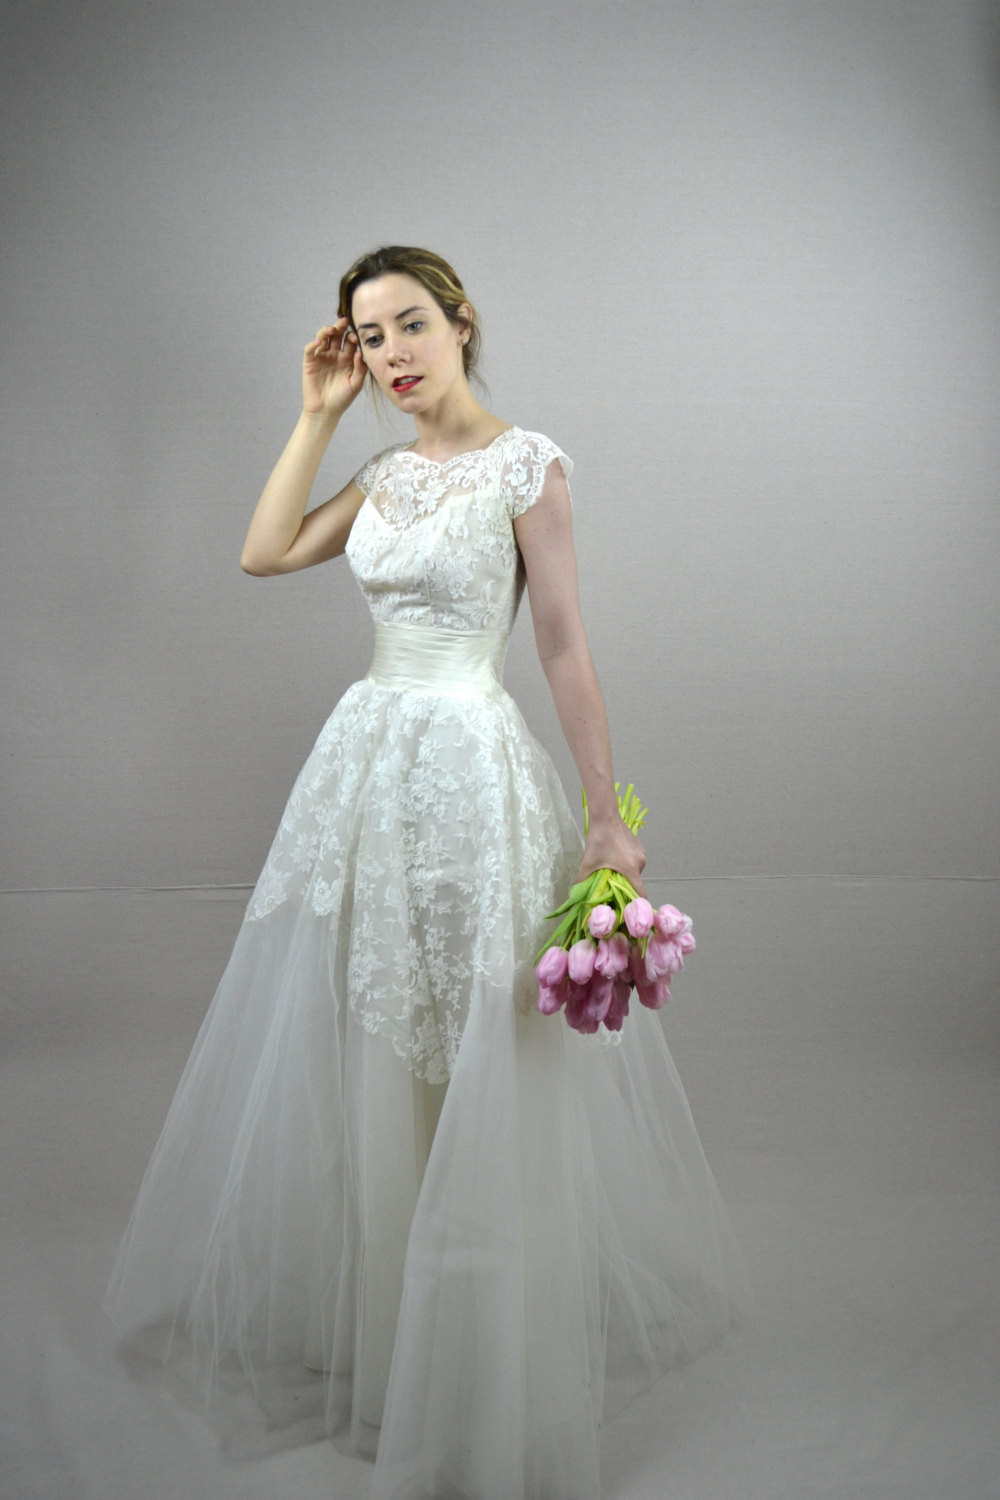 1950s Vintage Wedding Dresses
 50s wedding dress vintage 1950s wedding dress by